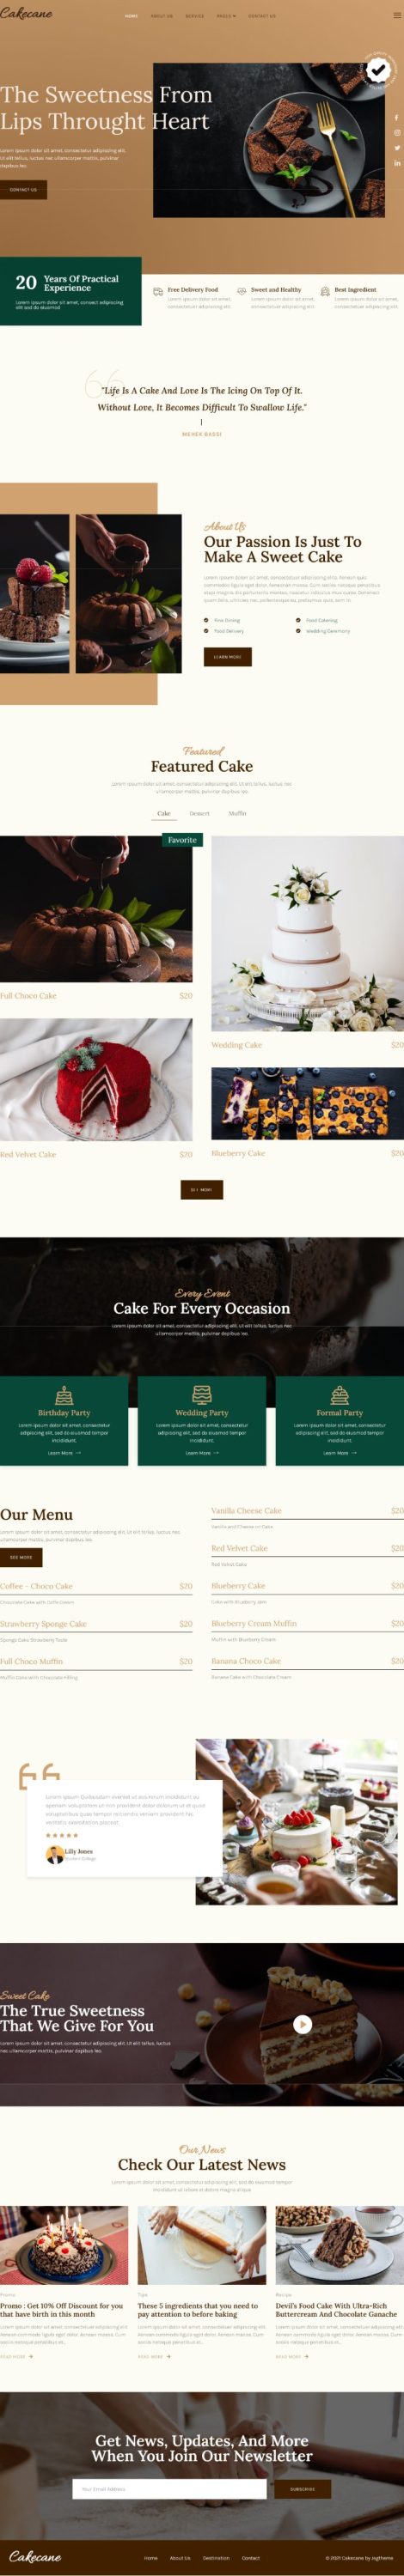 Mẫu website giới thiệu tiệm bánh - Cakecane